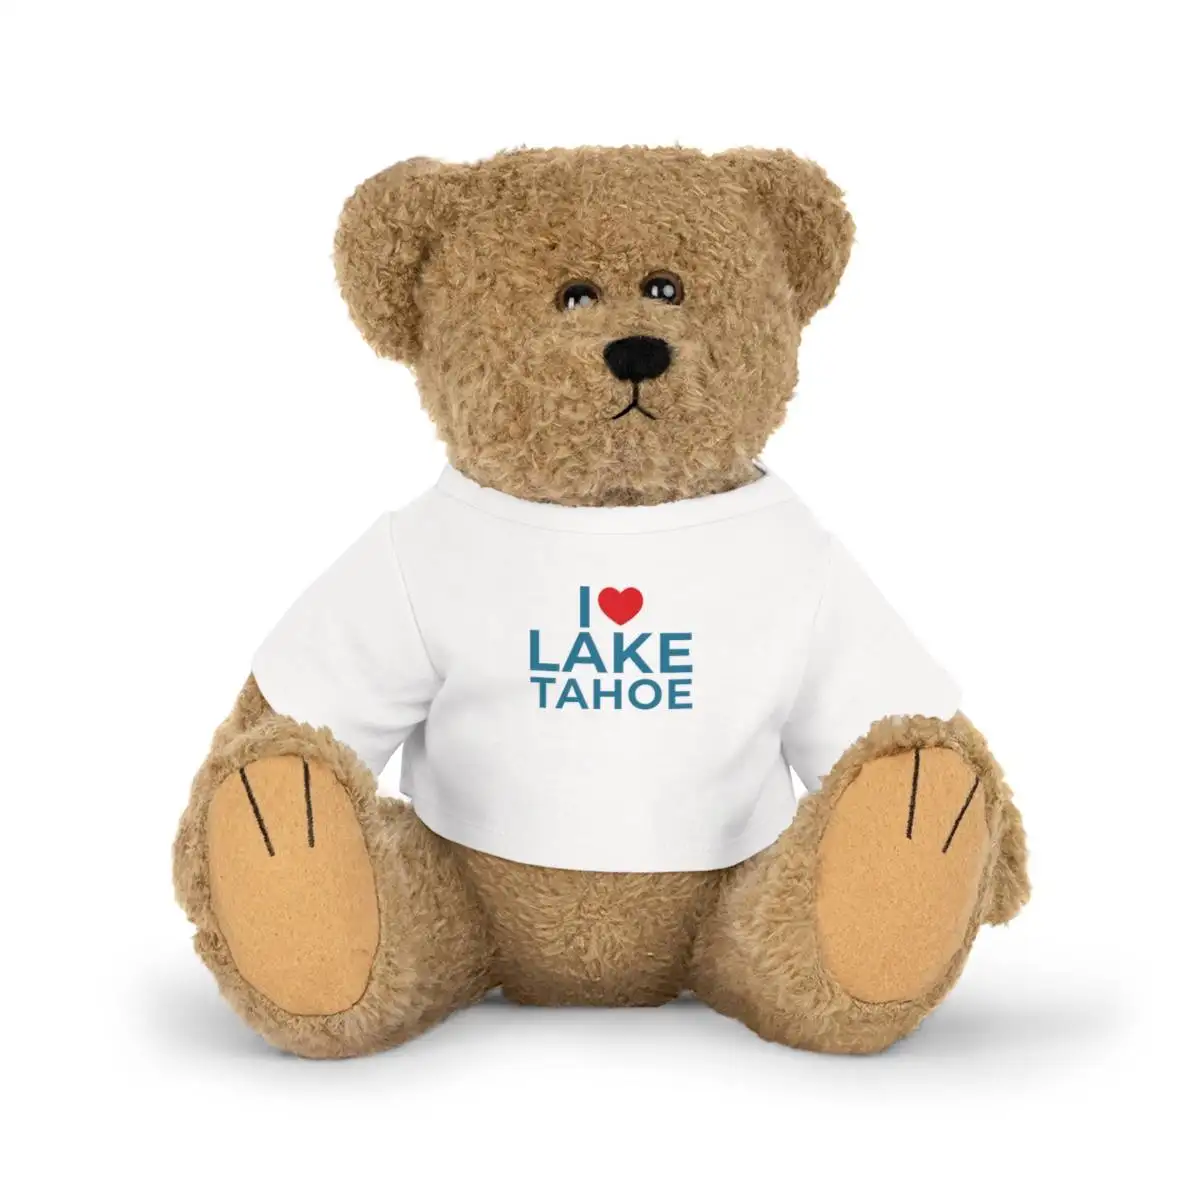 I Love Lake Tahoe Stuffed Teddy Bear Animal